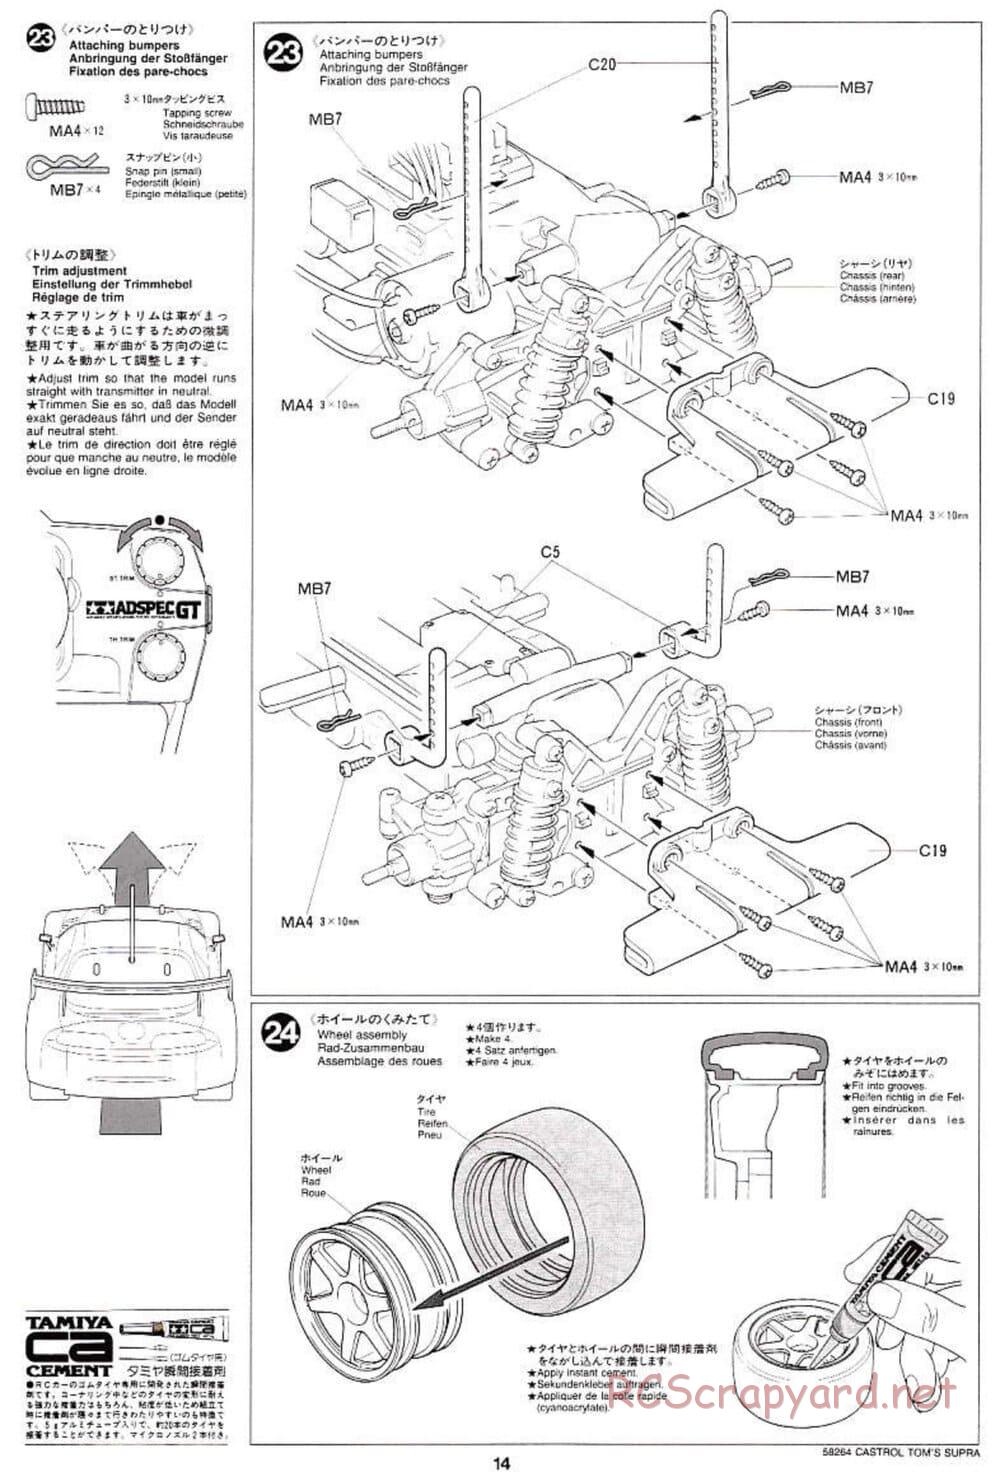 Tamiya - Castrol Tom's Supra 2000 - TL-01 Chassis - Manual - Page 14